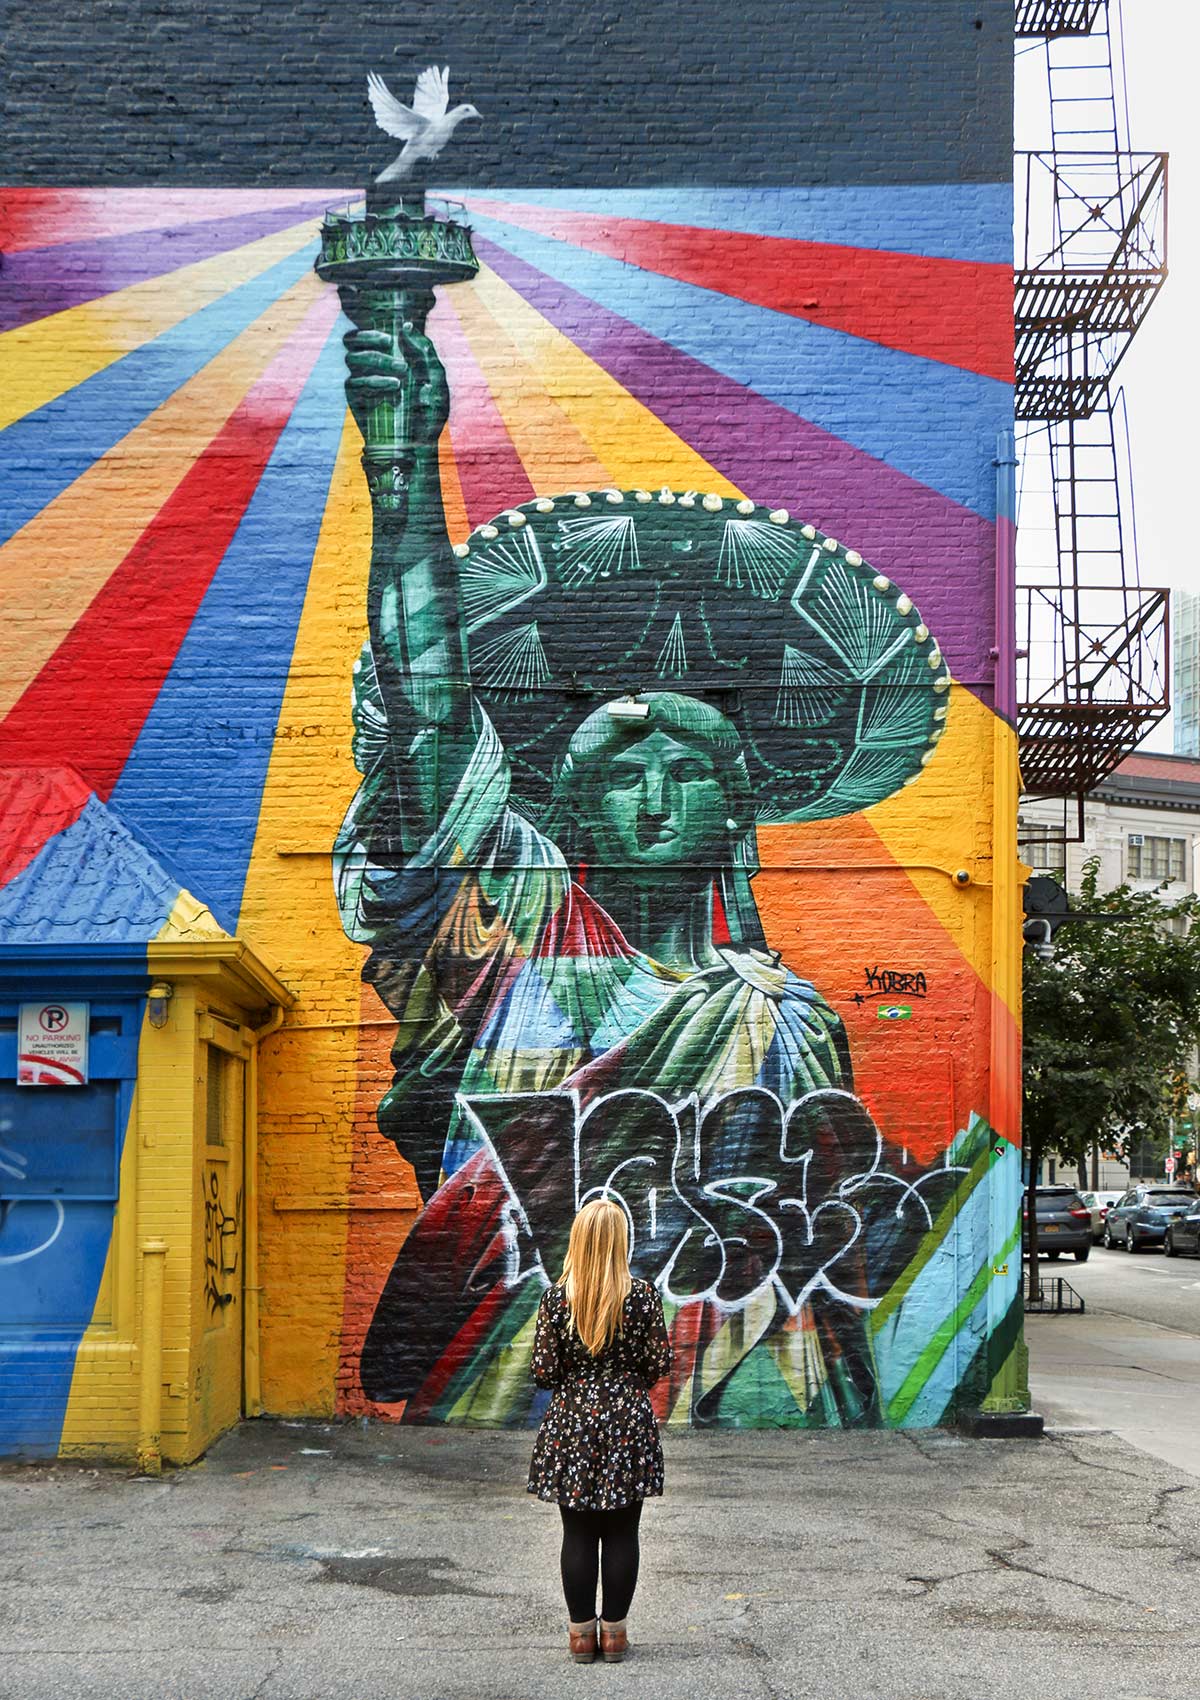 Murale, Statue de la Liberté, Kobra, New York, NY, États-Unis / Mural, Statue of Liberty, Kobra, New York City, NY, USA